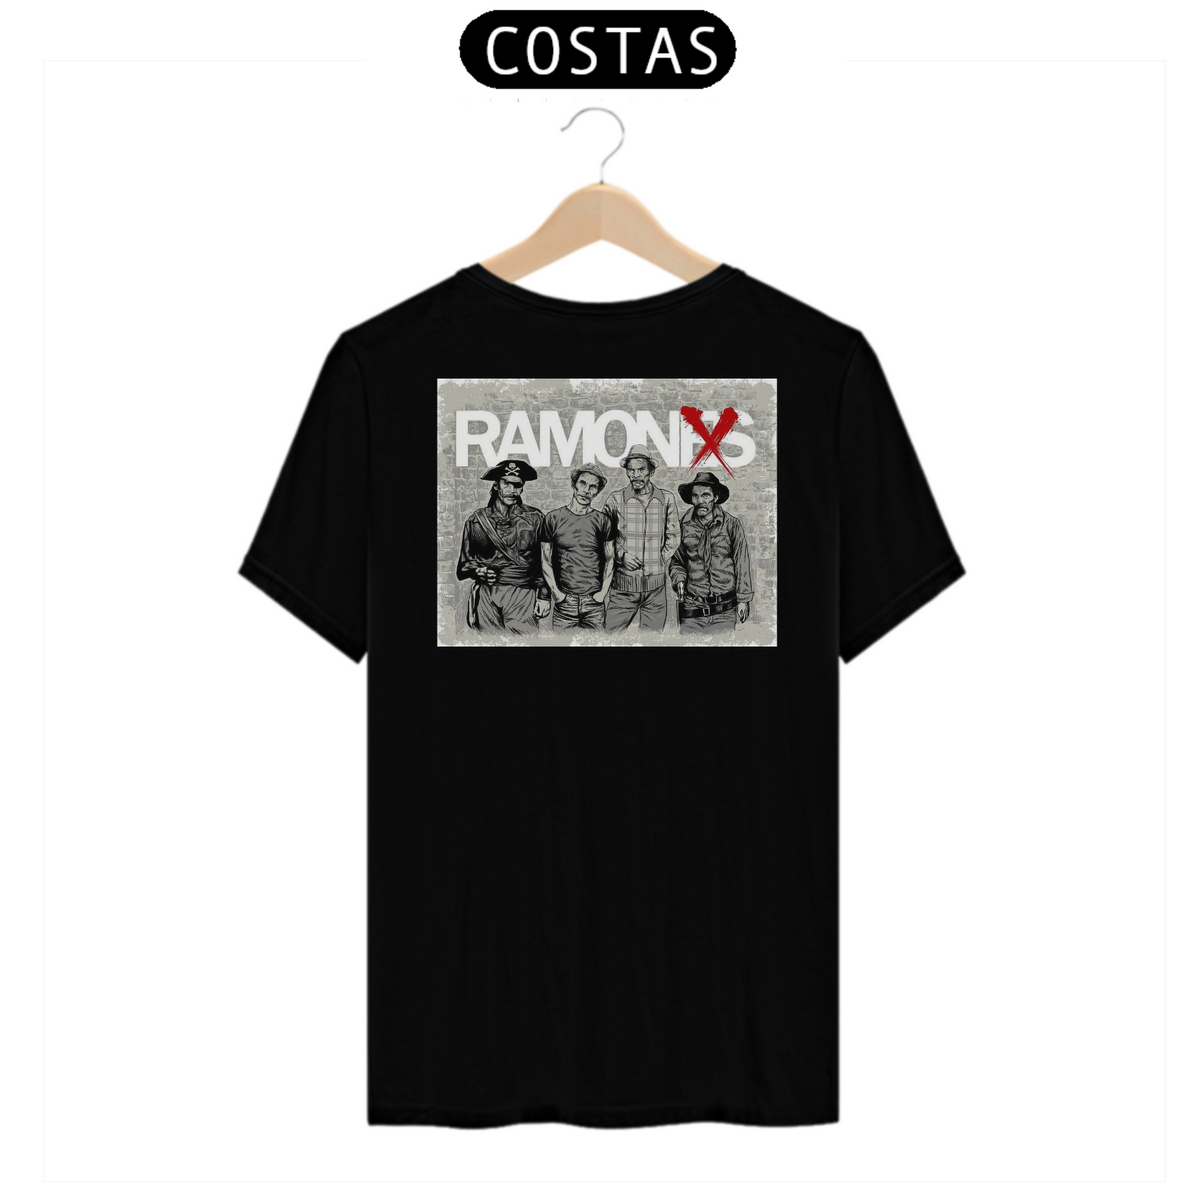 Nome do produto: T-shirt Ramons